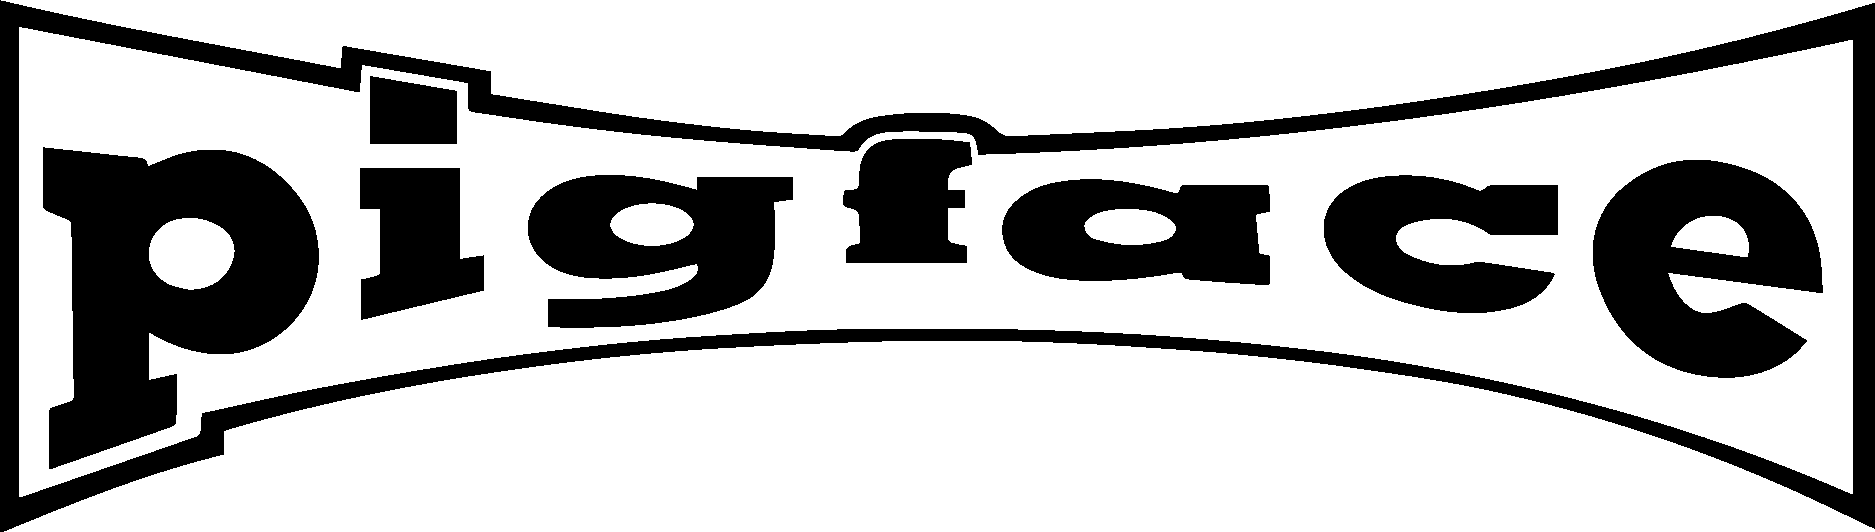 Pigface Band Logo Vector